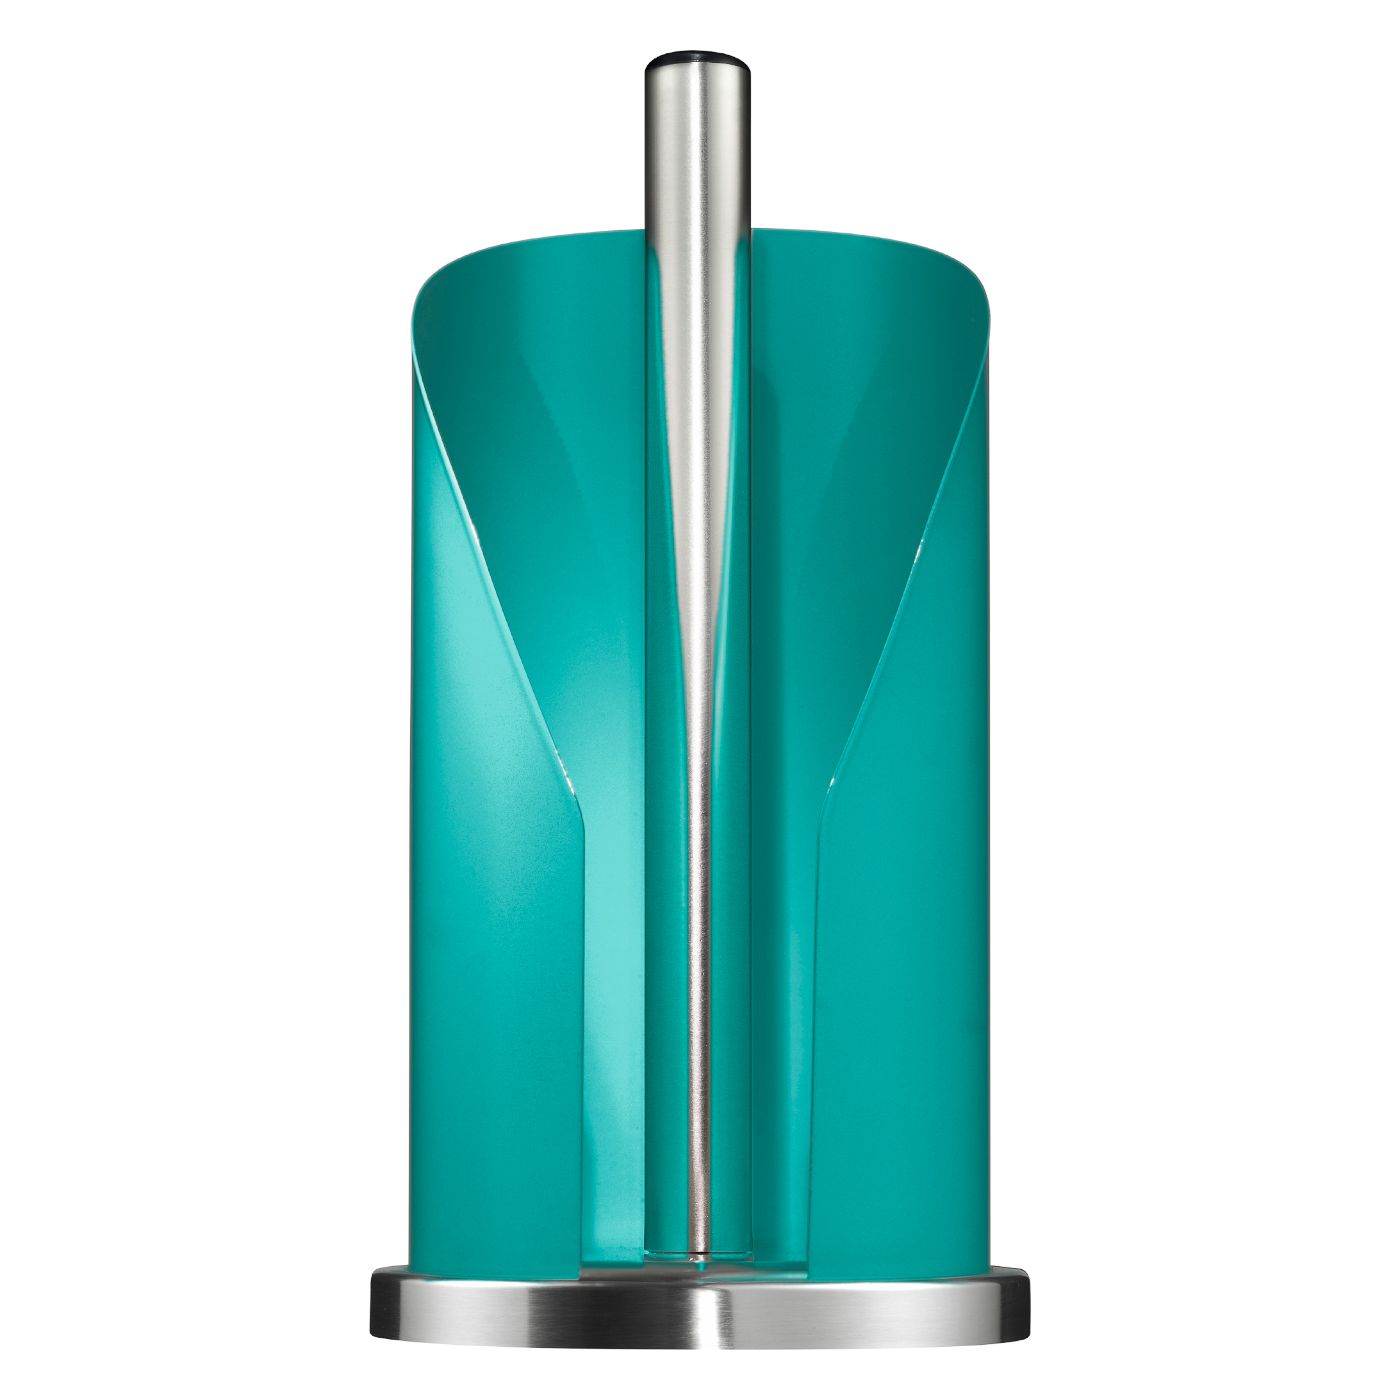 Wesco -  Roll holder - Turquoise